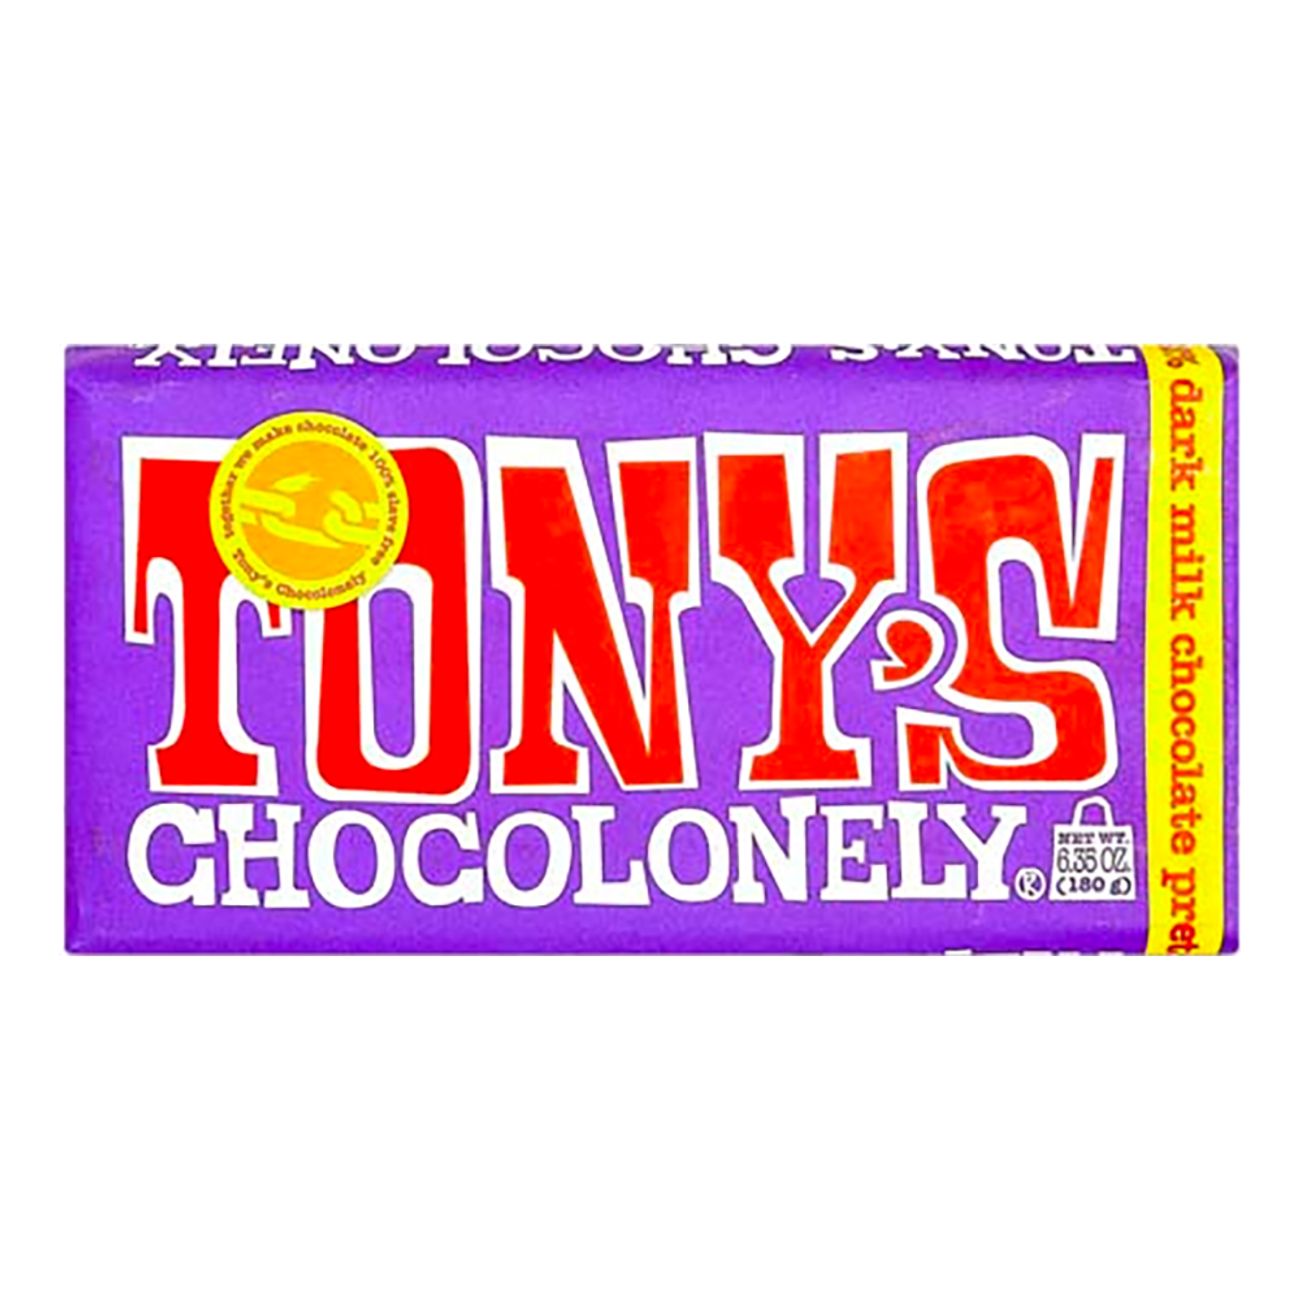 tonys-dark-choc-prezel-15-x-180-g-83702-1